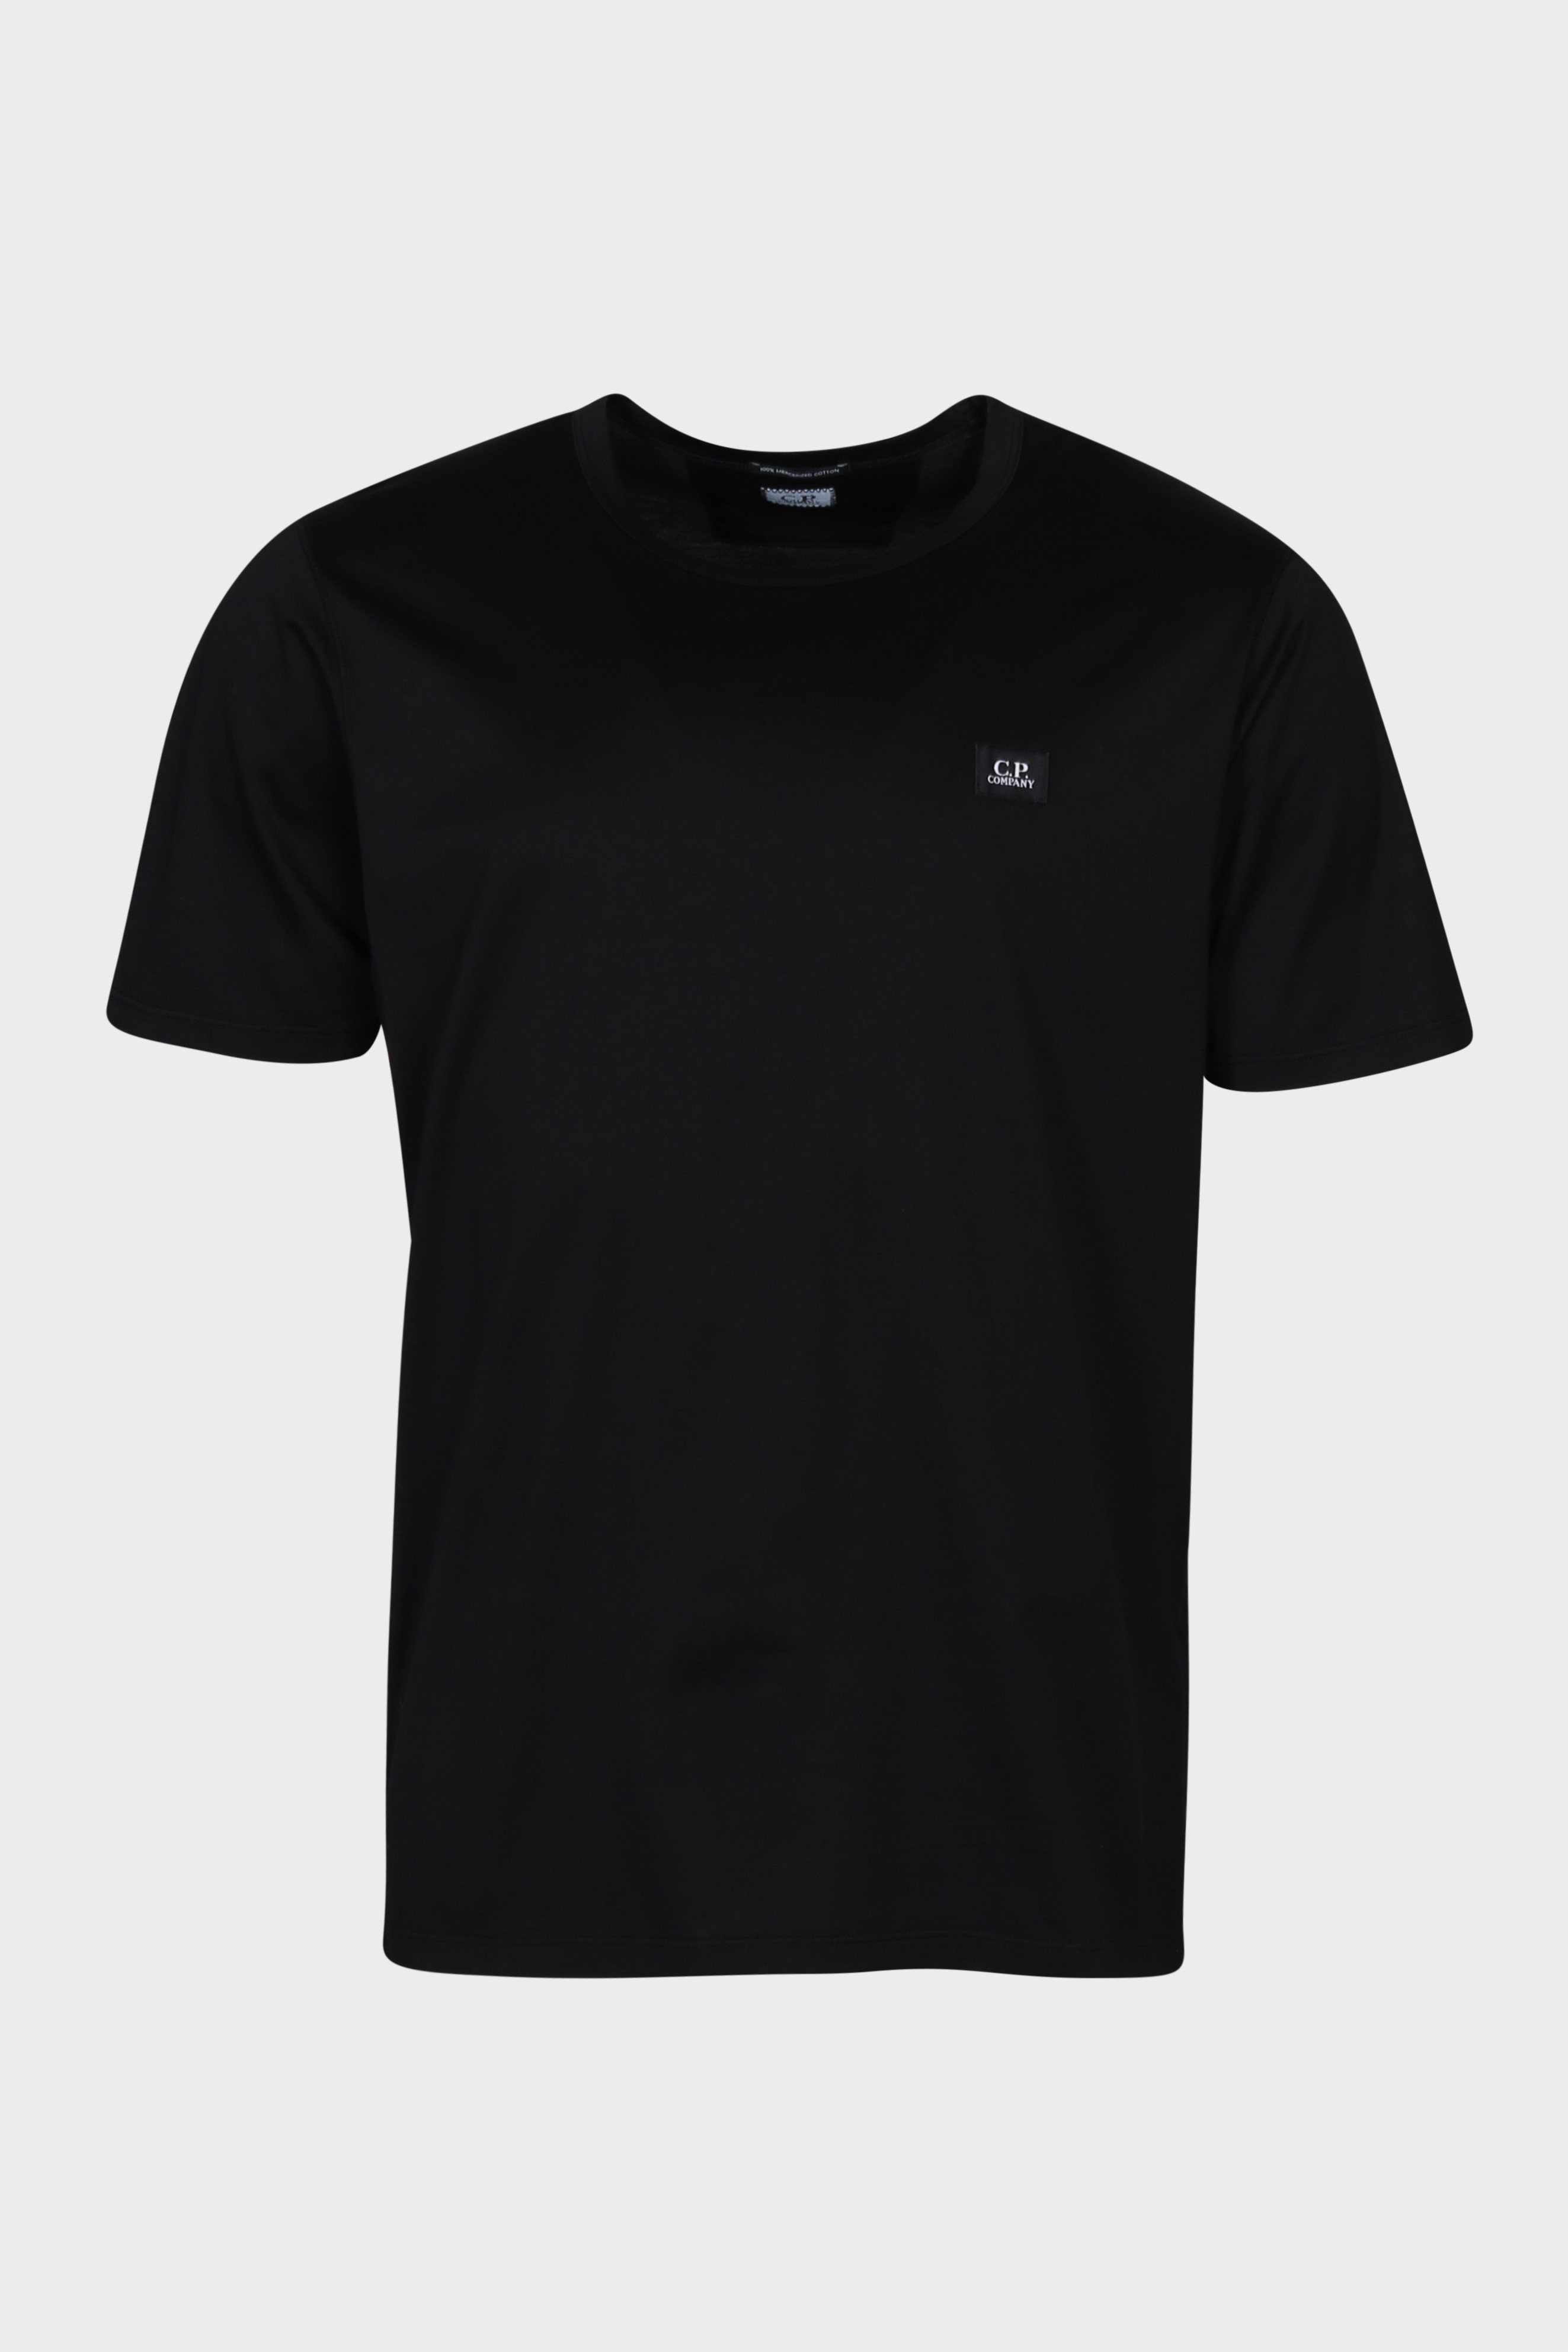 C.P. COMPANY T-Shirt in Black M